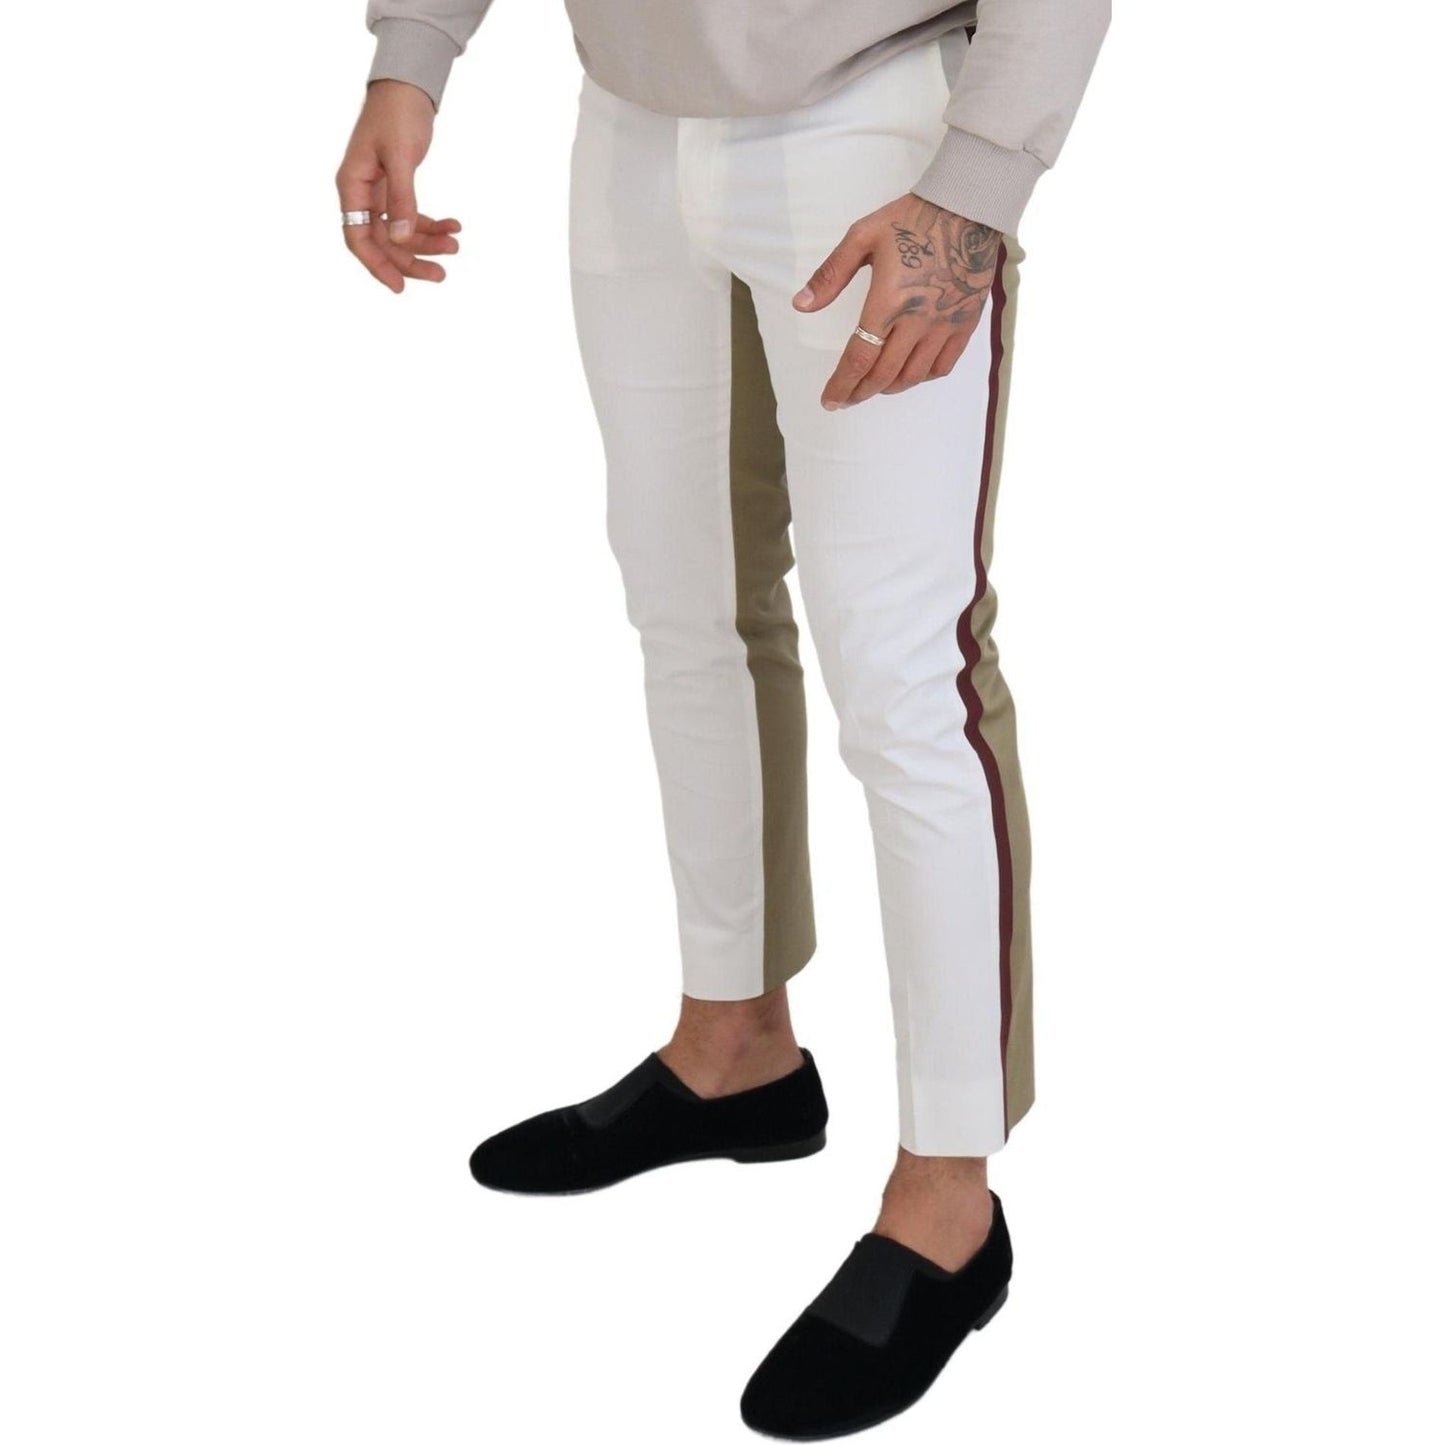 Dolce & Gabbana Two-Tone White & Brown Chic Cotton Pants white-brown-slim-fit-chino-pants-1